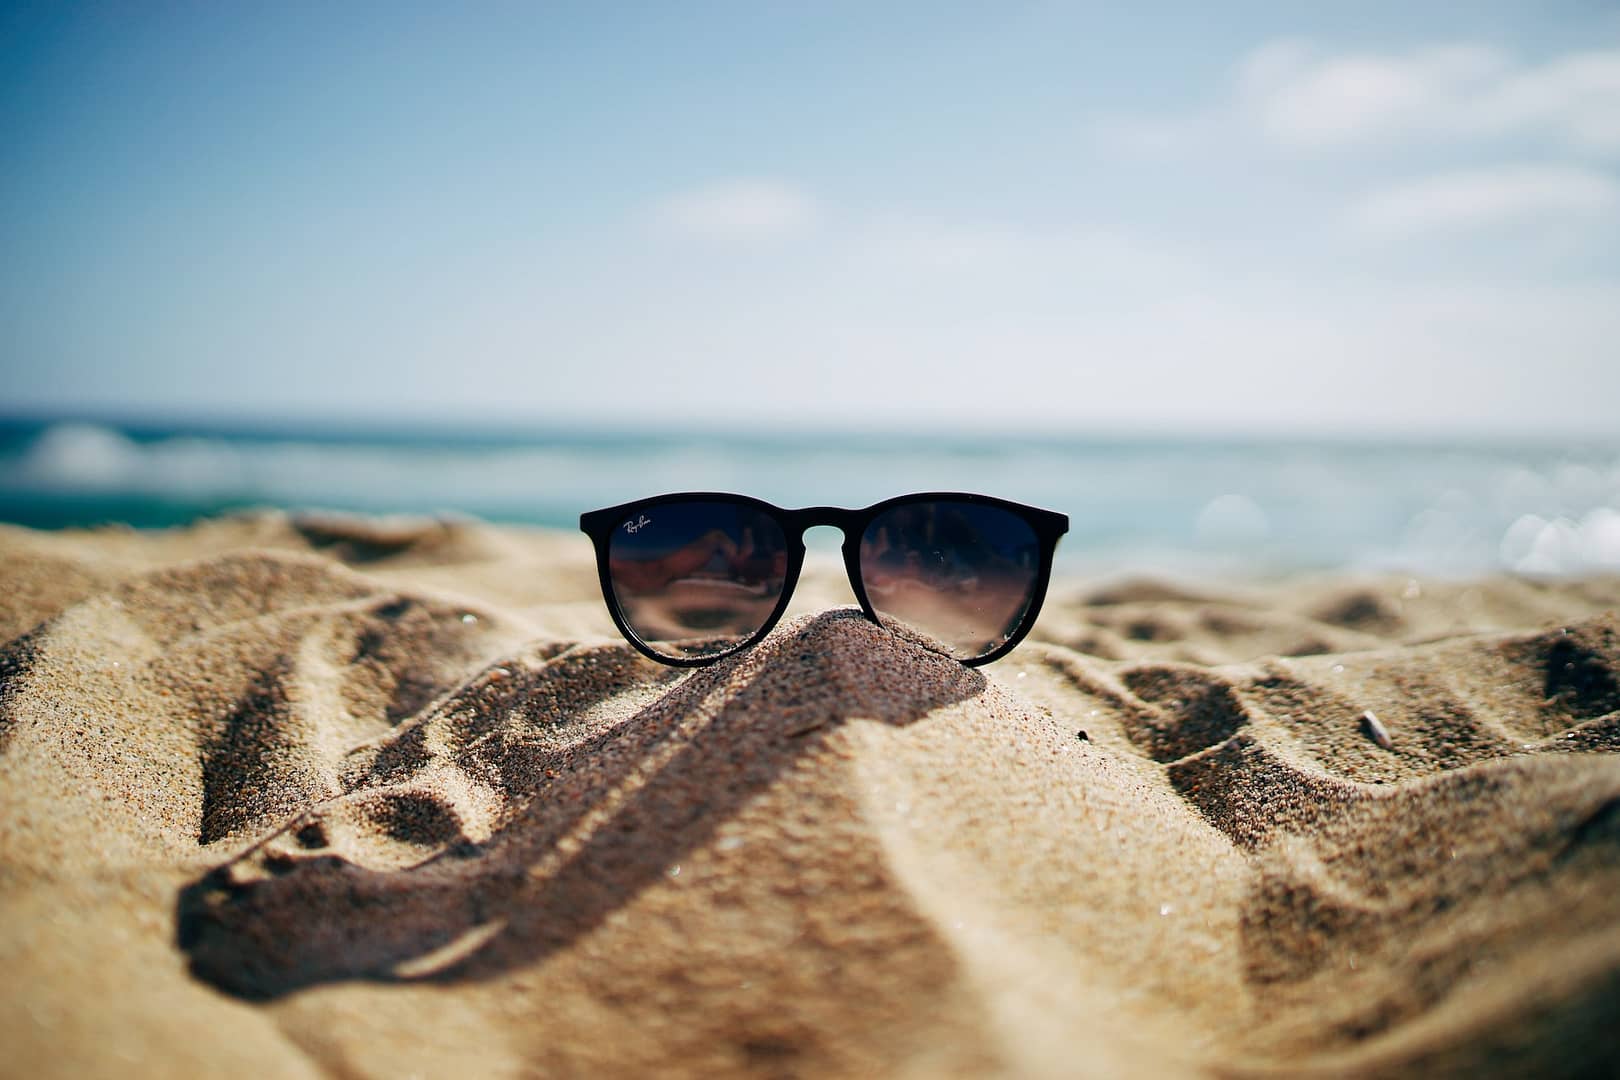 sunglasses resting on sand on the beach